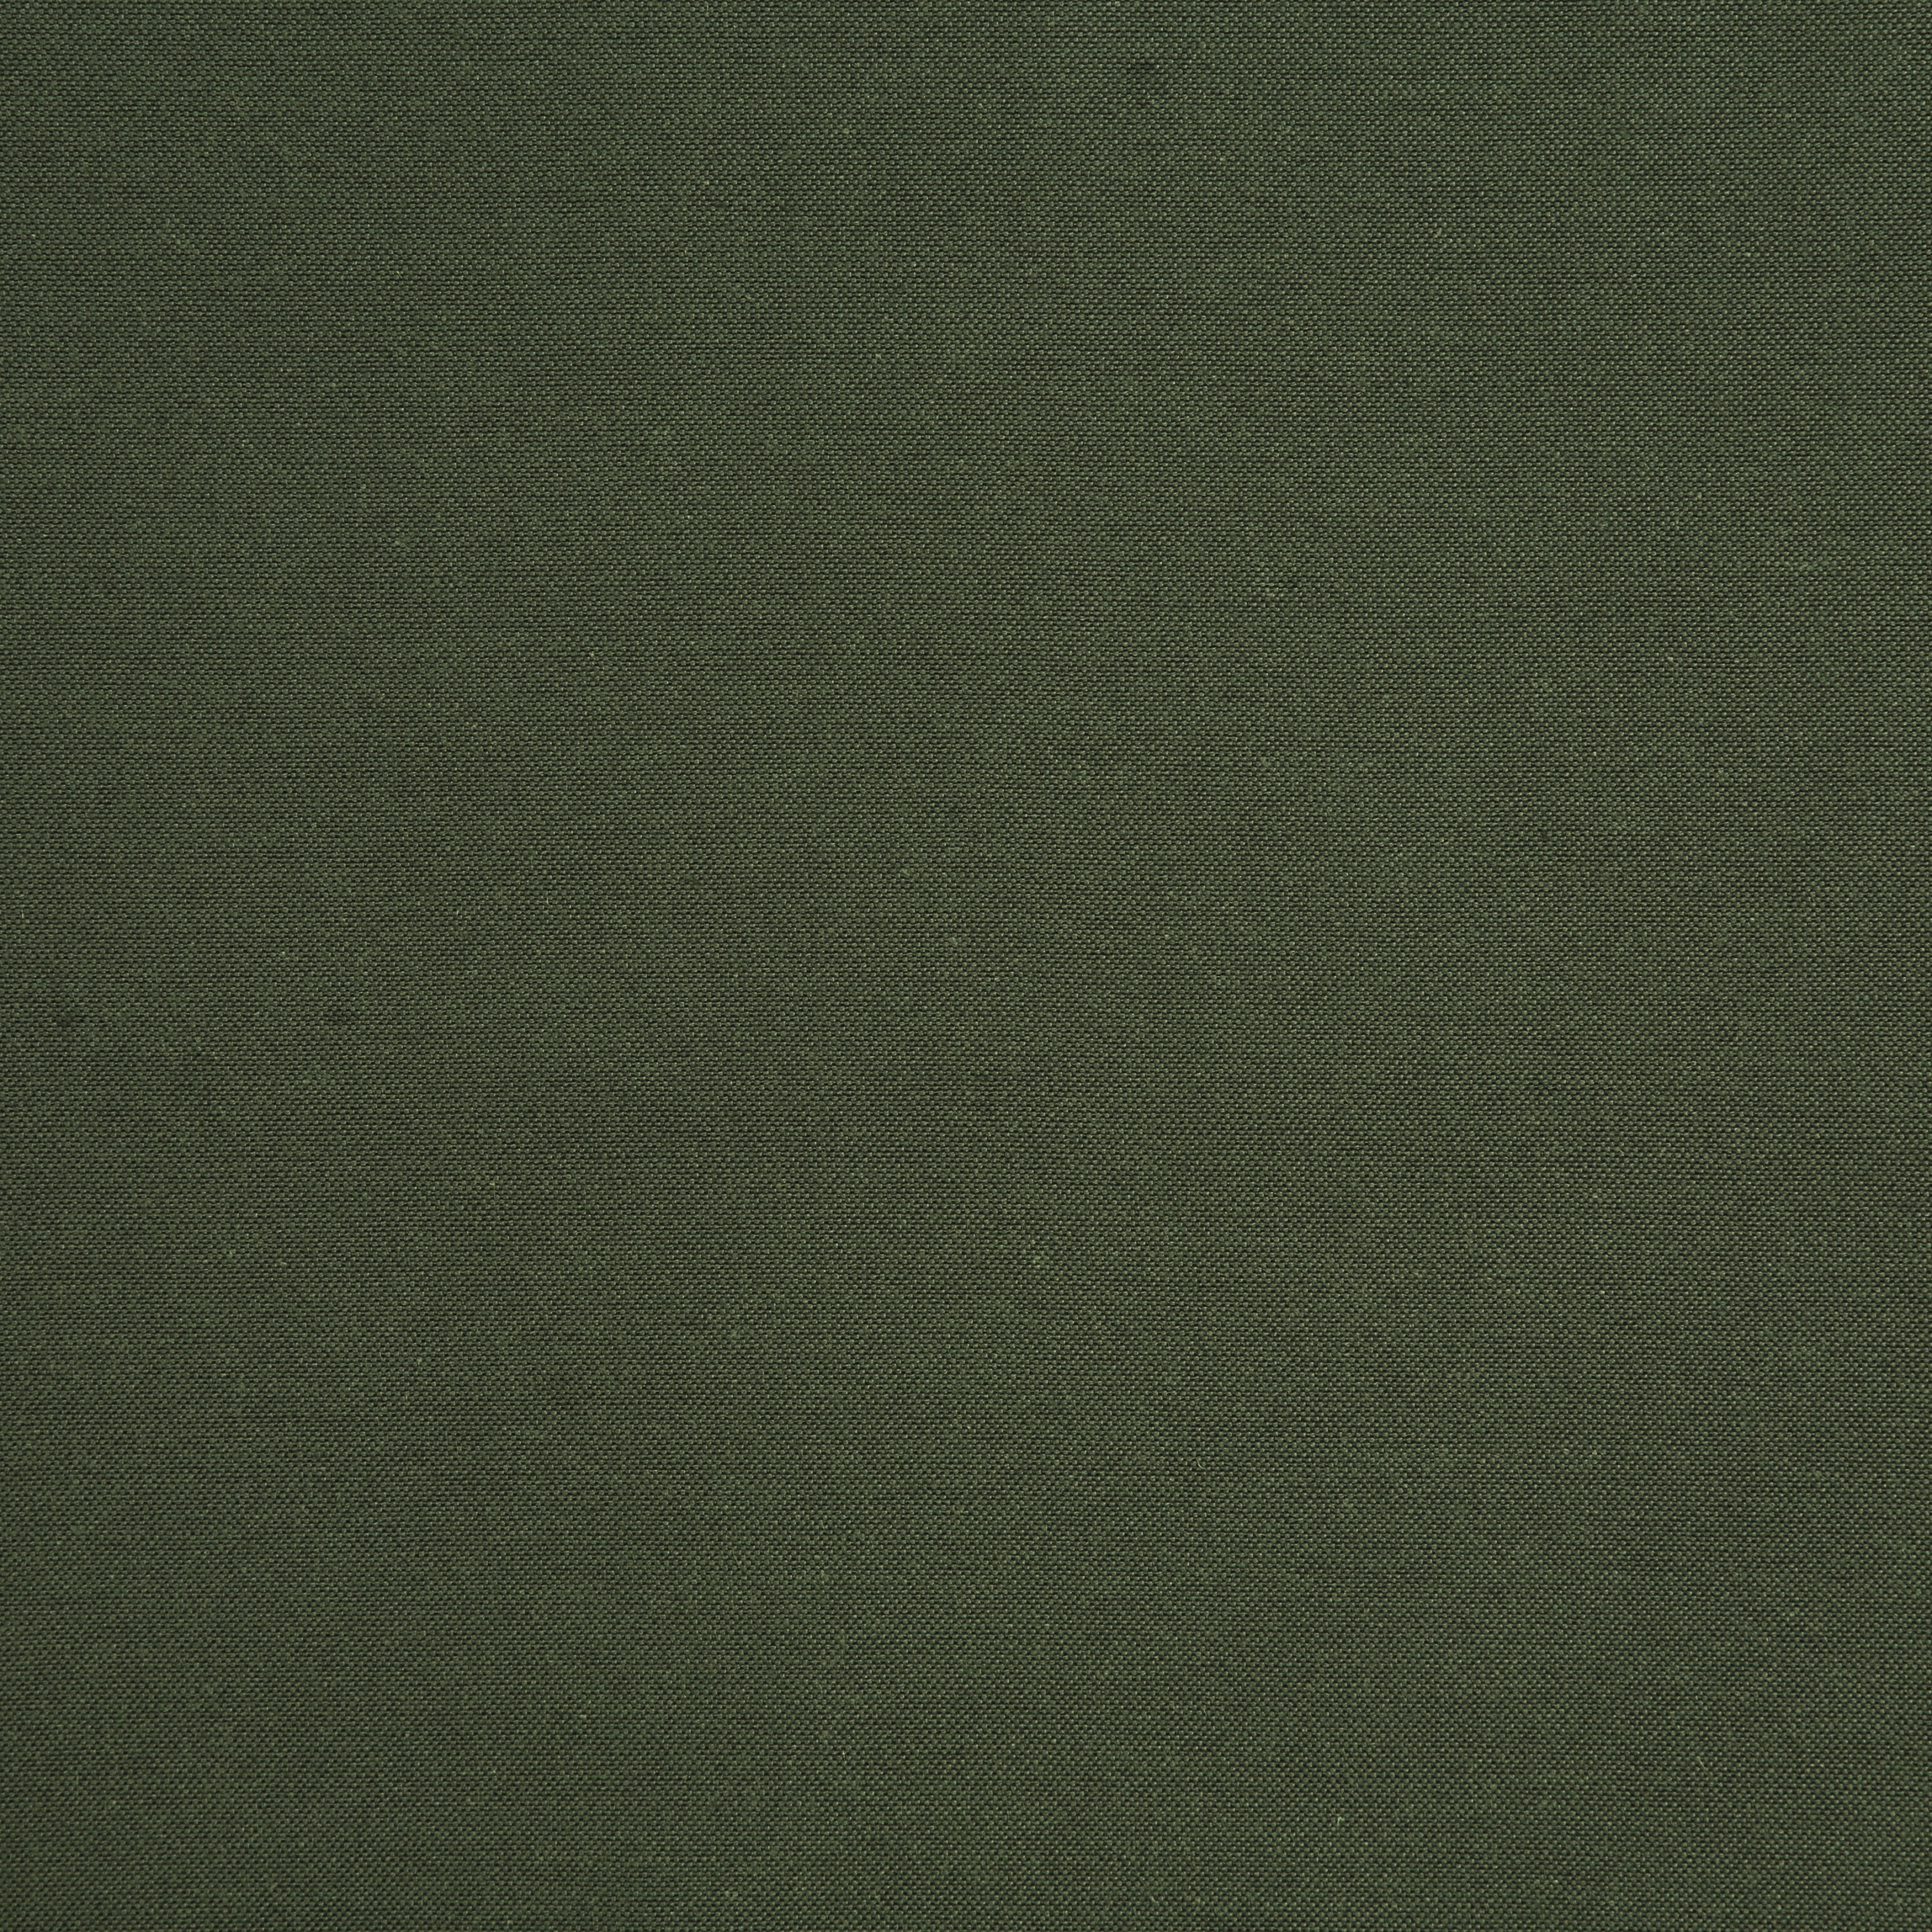 OF01- Dark Olive plain Oxford fabric